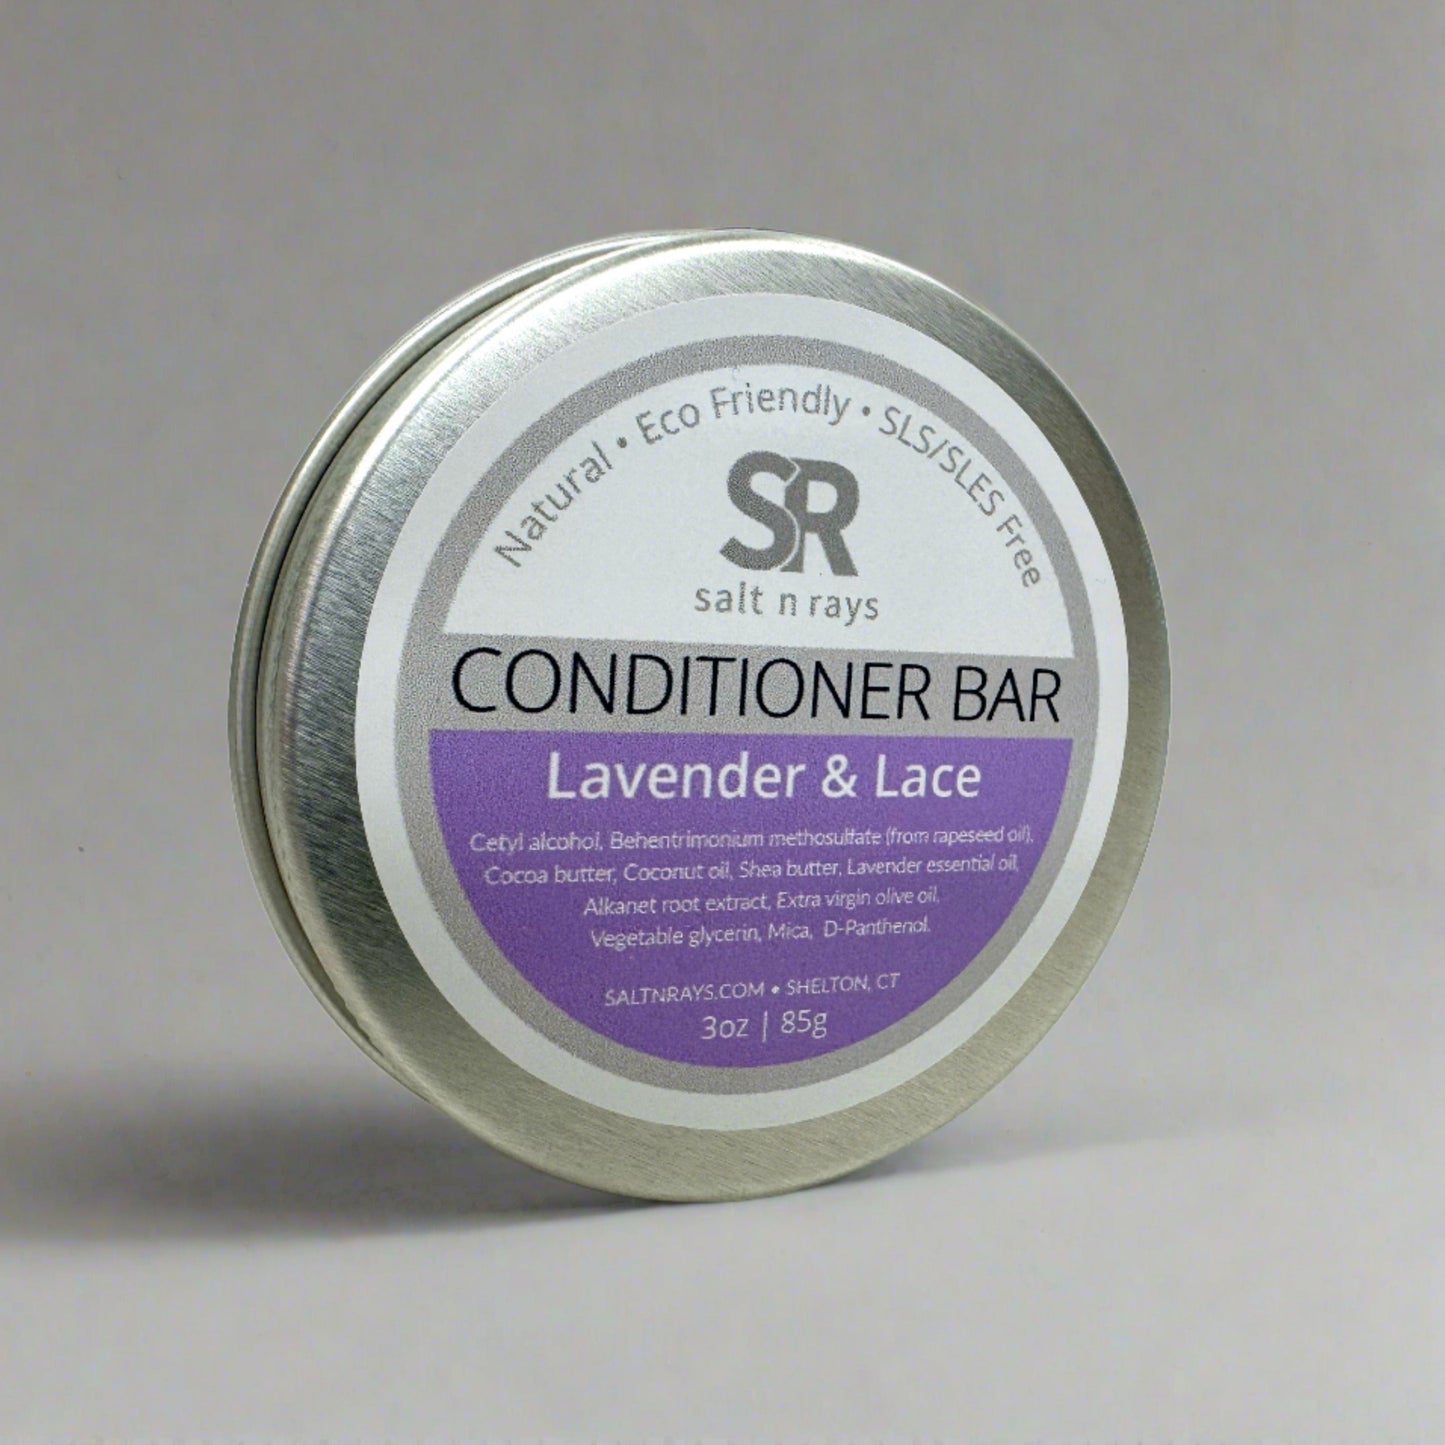 Lavendar and Lace Conditioner Bar